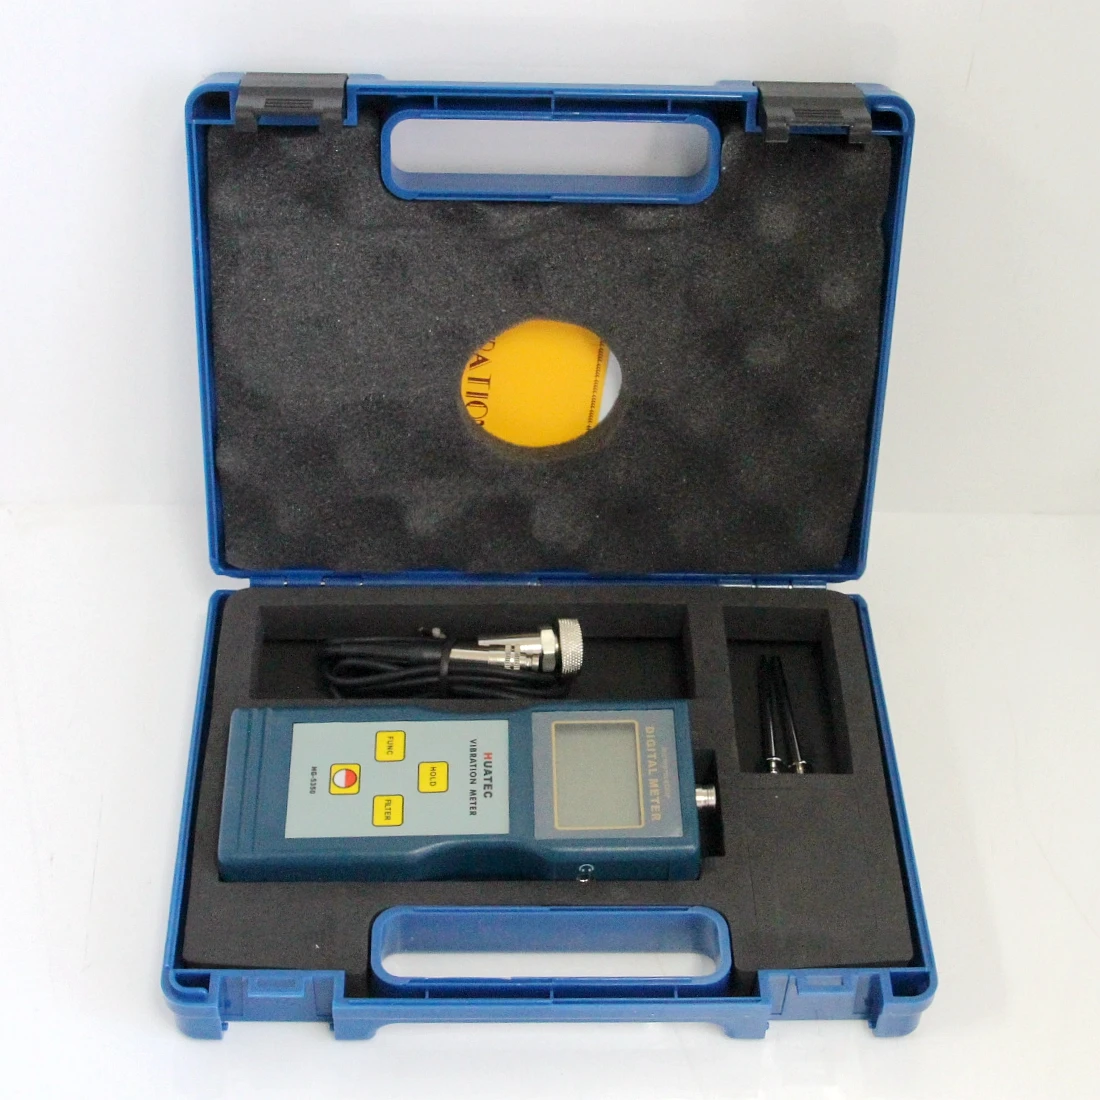 

Portable Multi-function Vibration Tester HG-5350